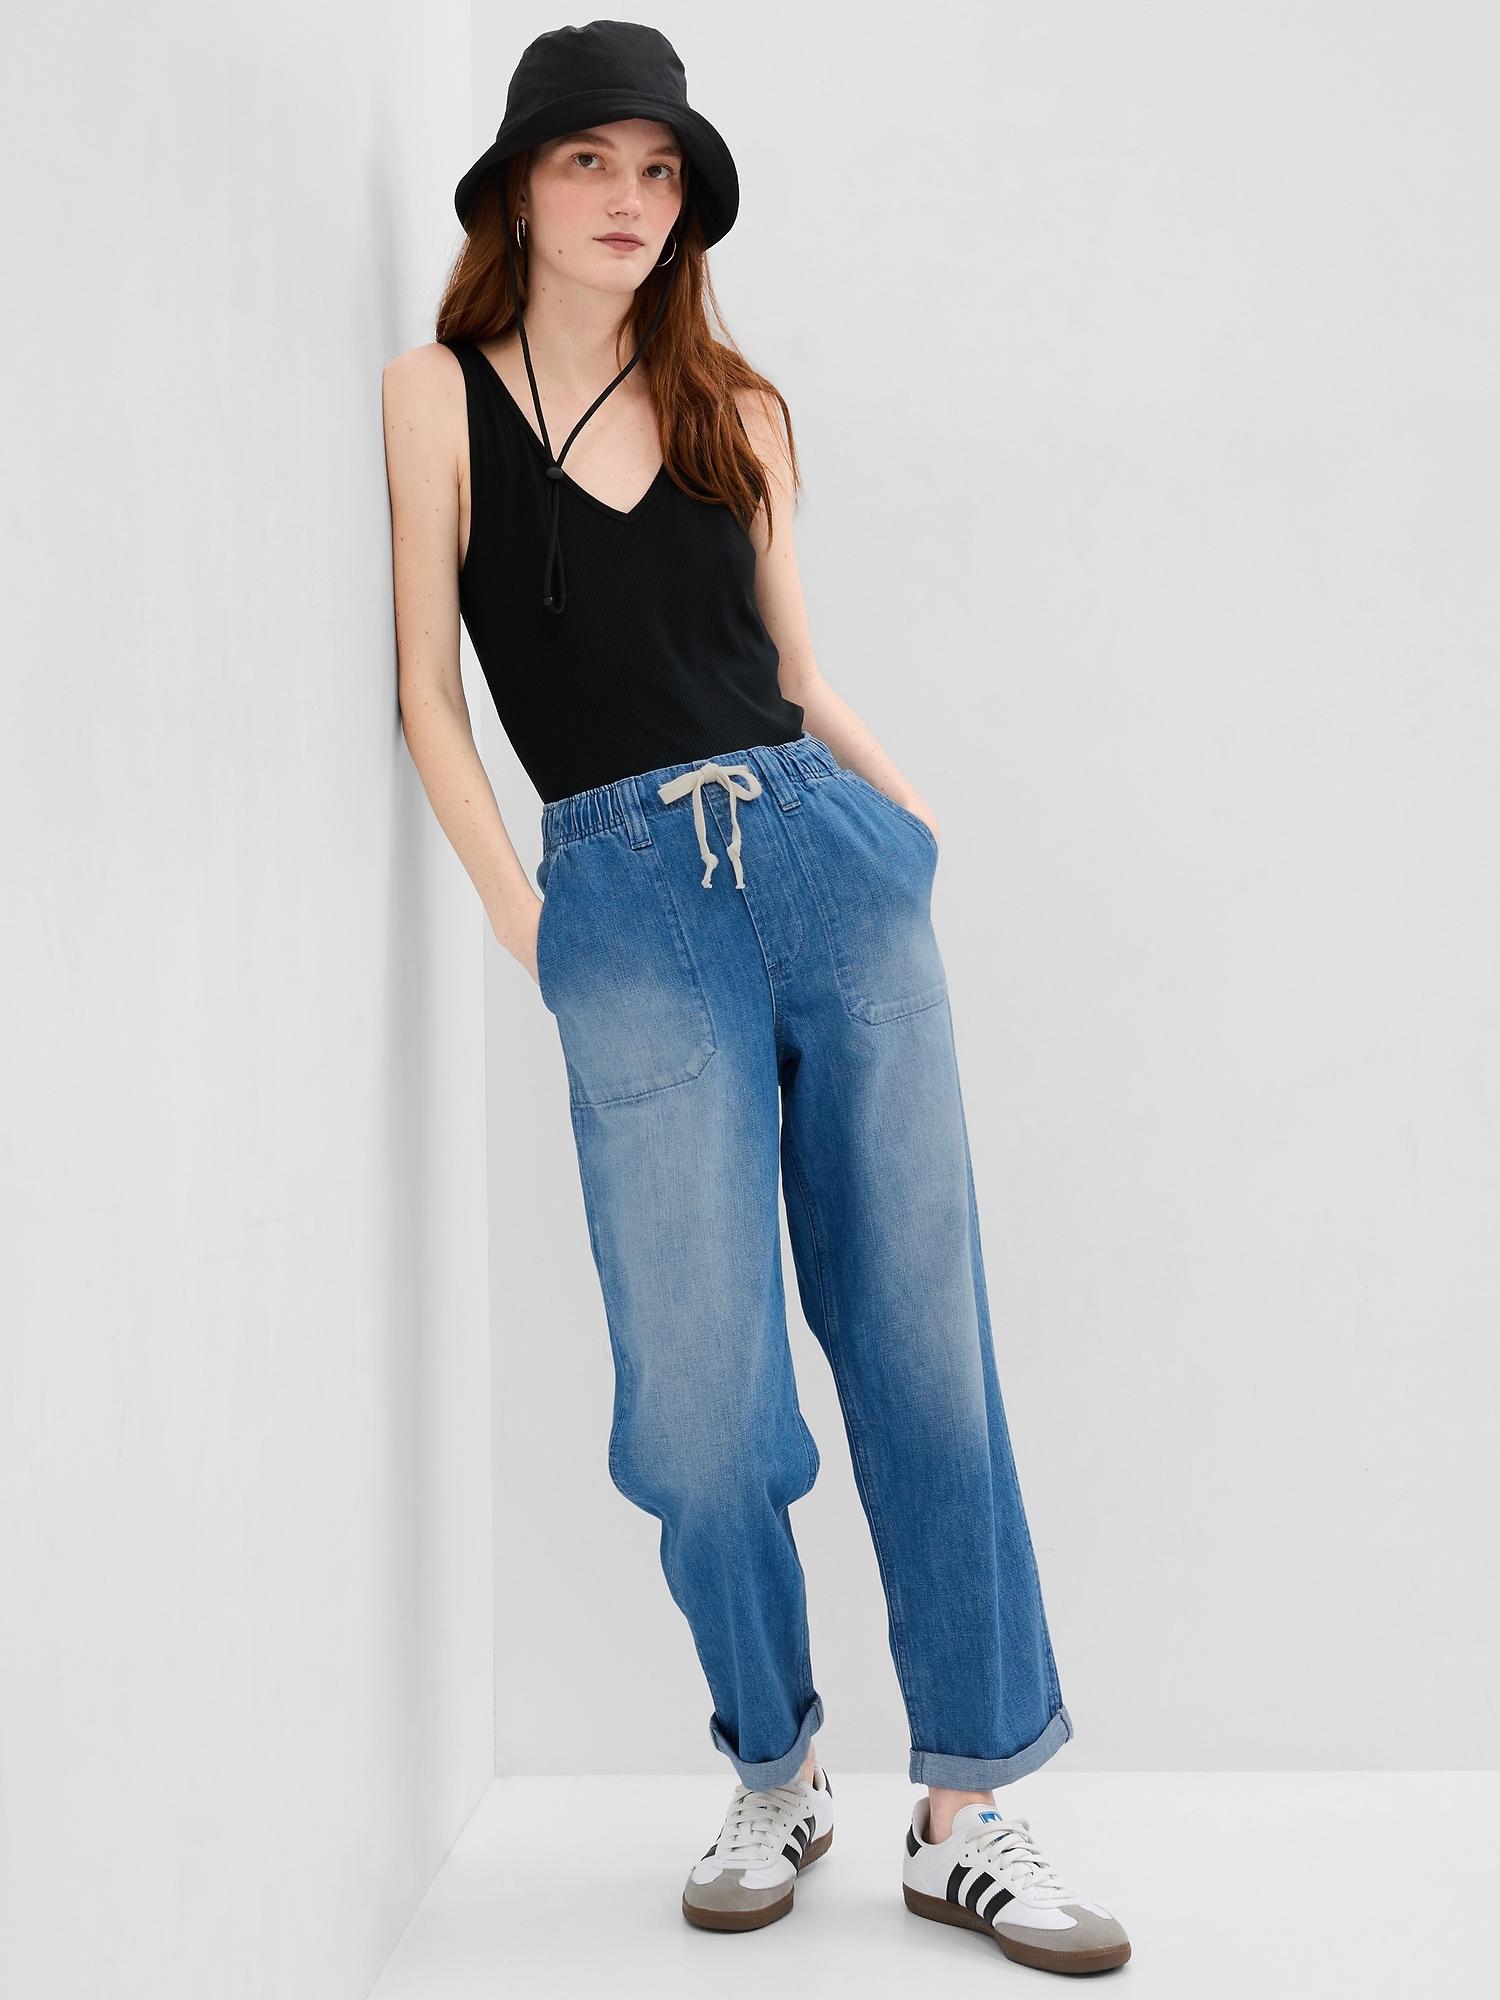 NWT 30 GAP MidRise Lace-Up Crotch Skinny Jeans